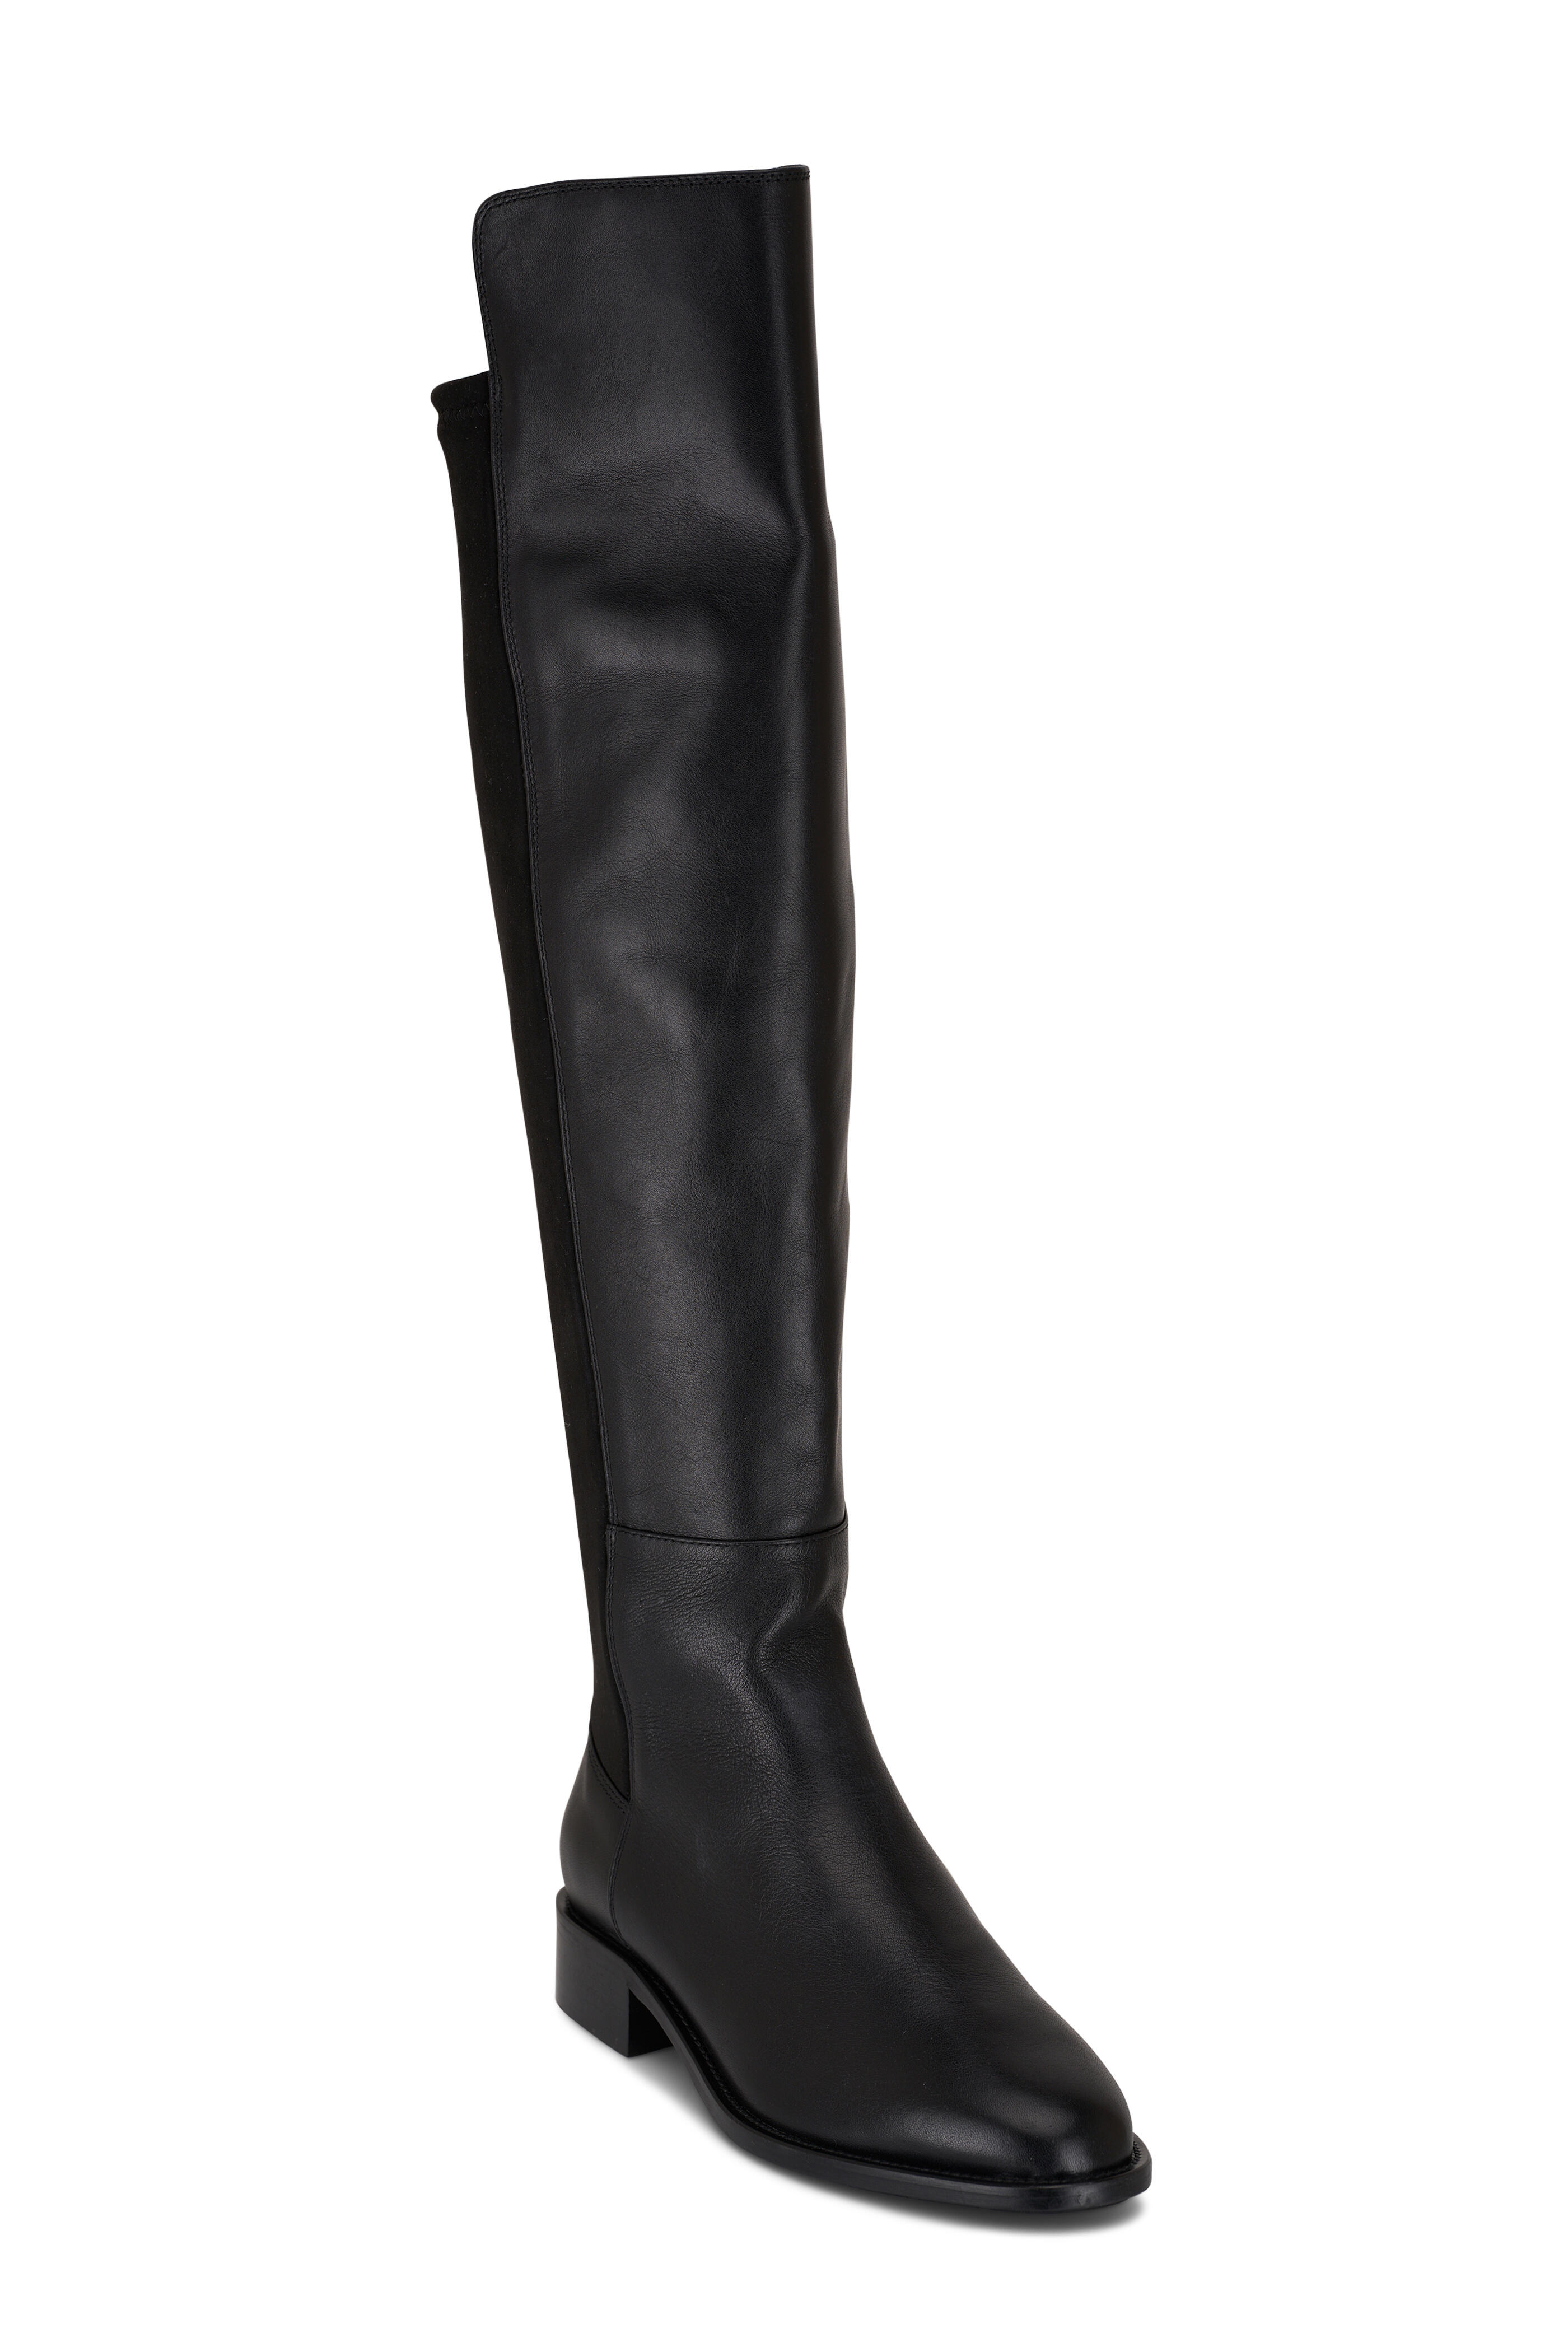 Aquatalia - Natessa Black Stretch & Leather Over-The-Knee Boot